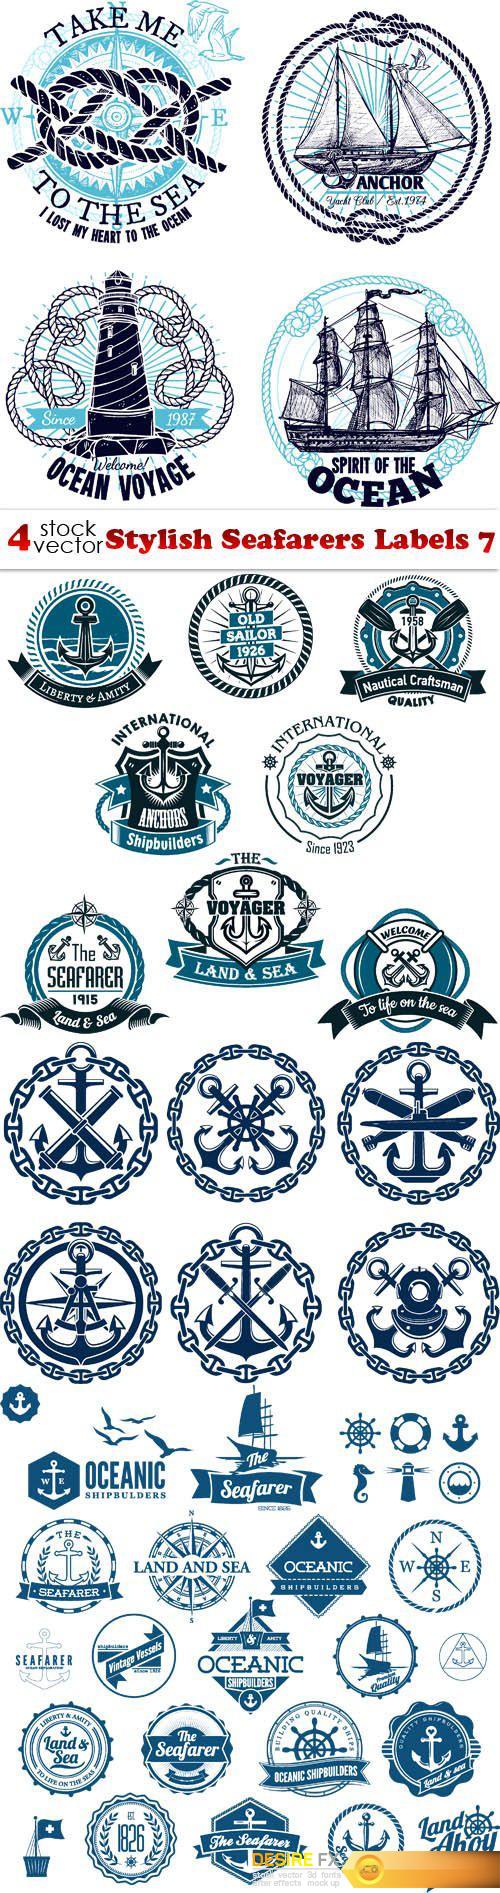 Vectors - Stylish Seafarers Labels 7